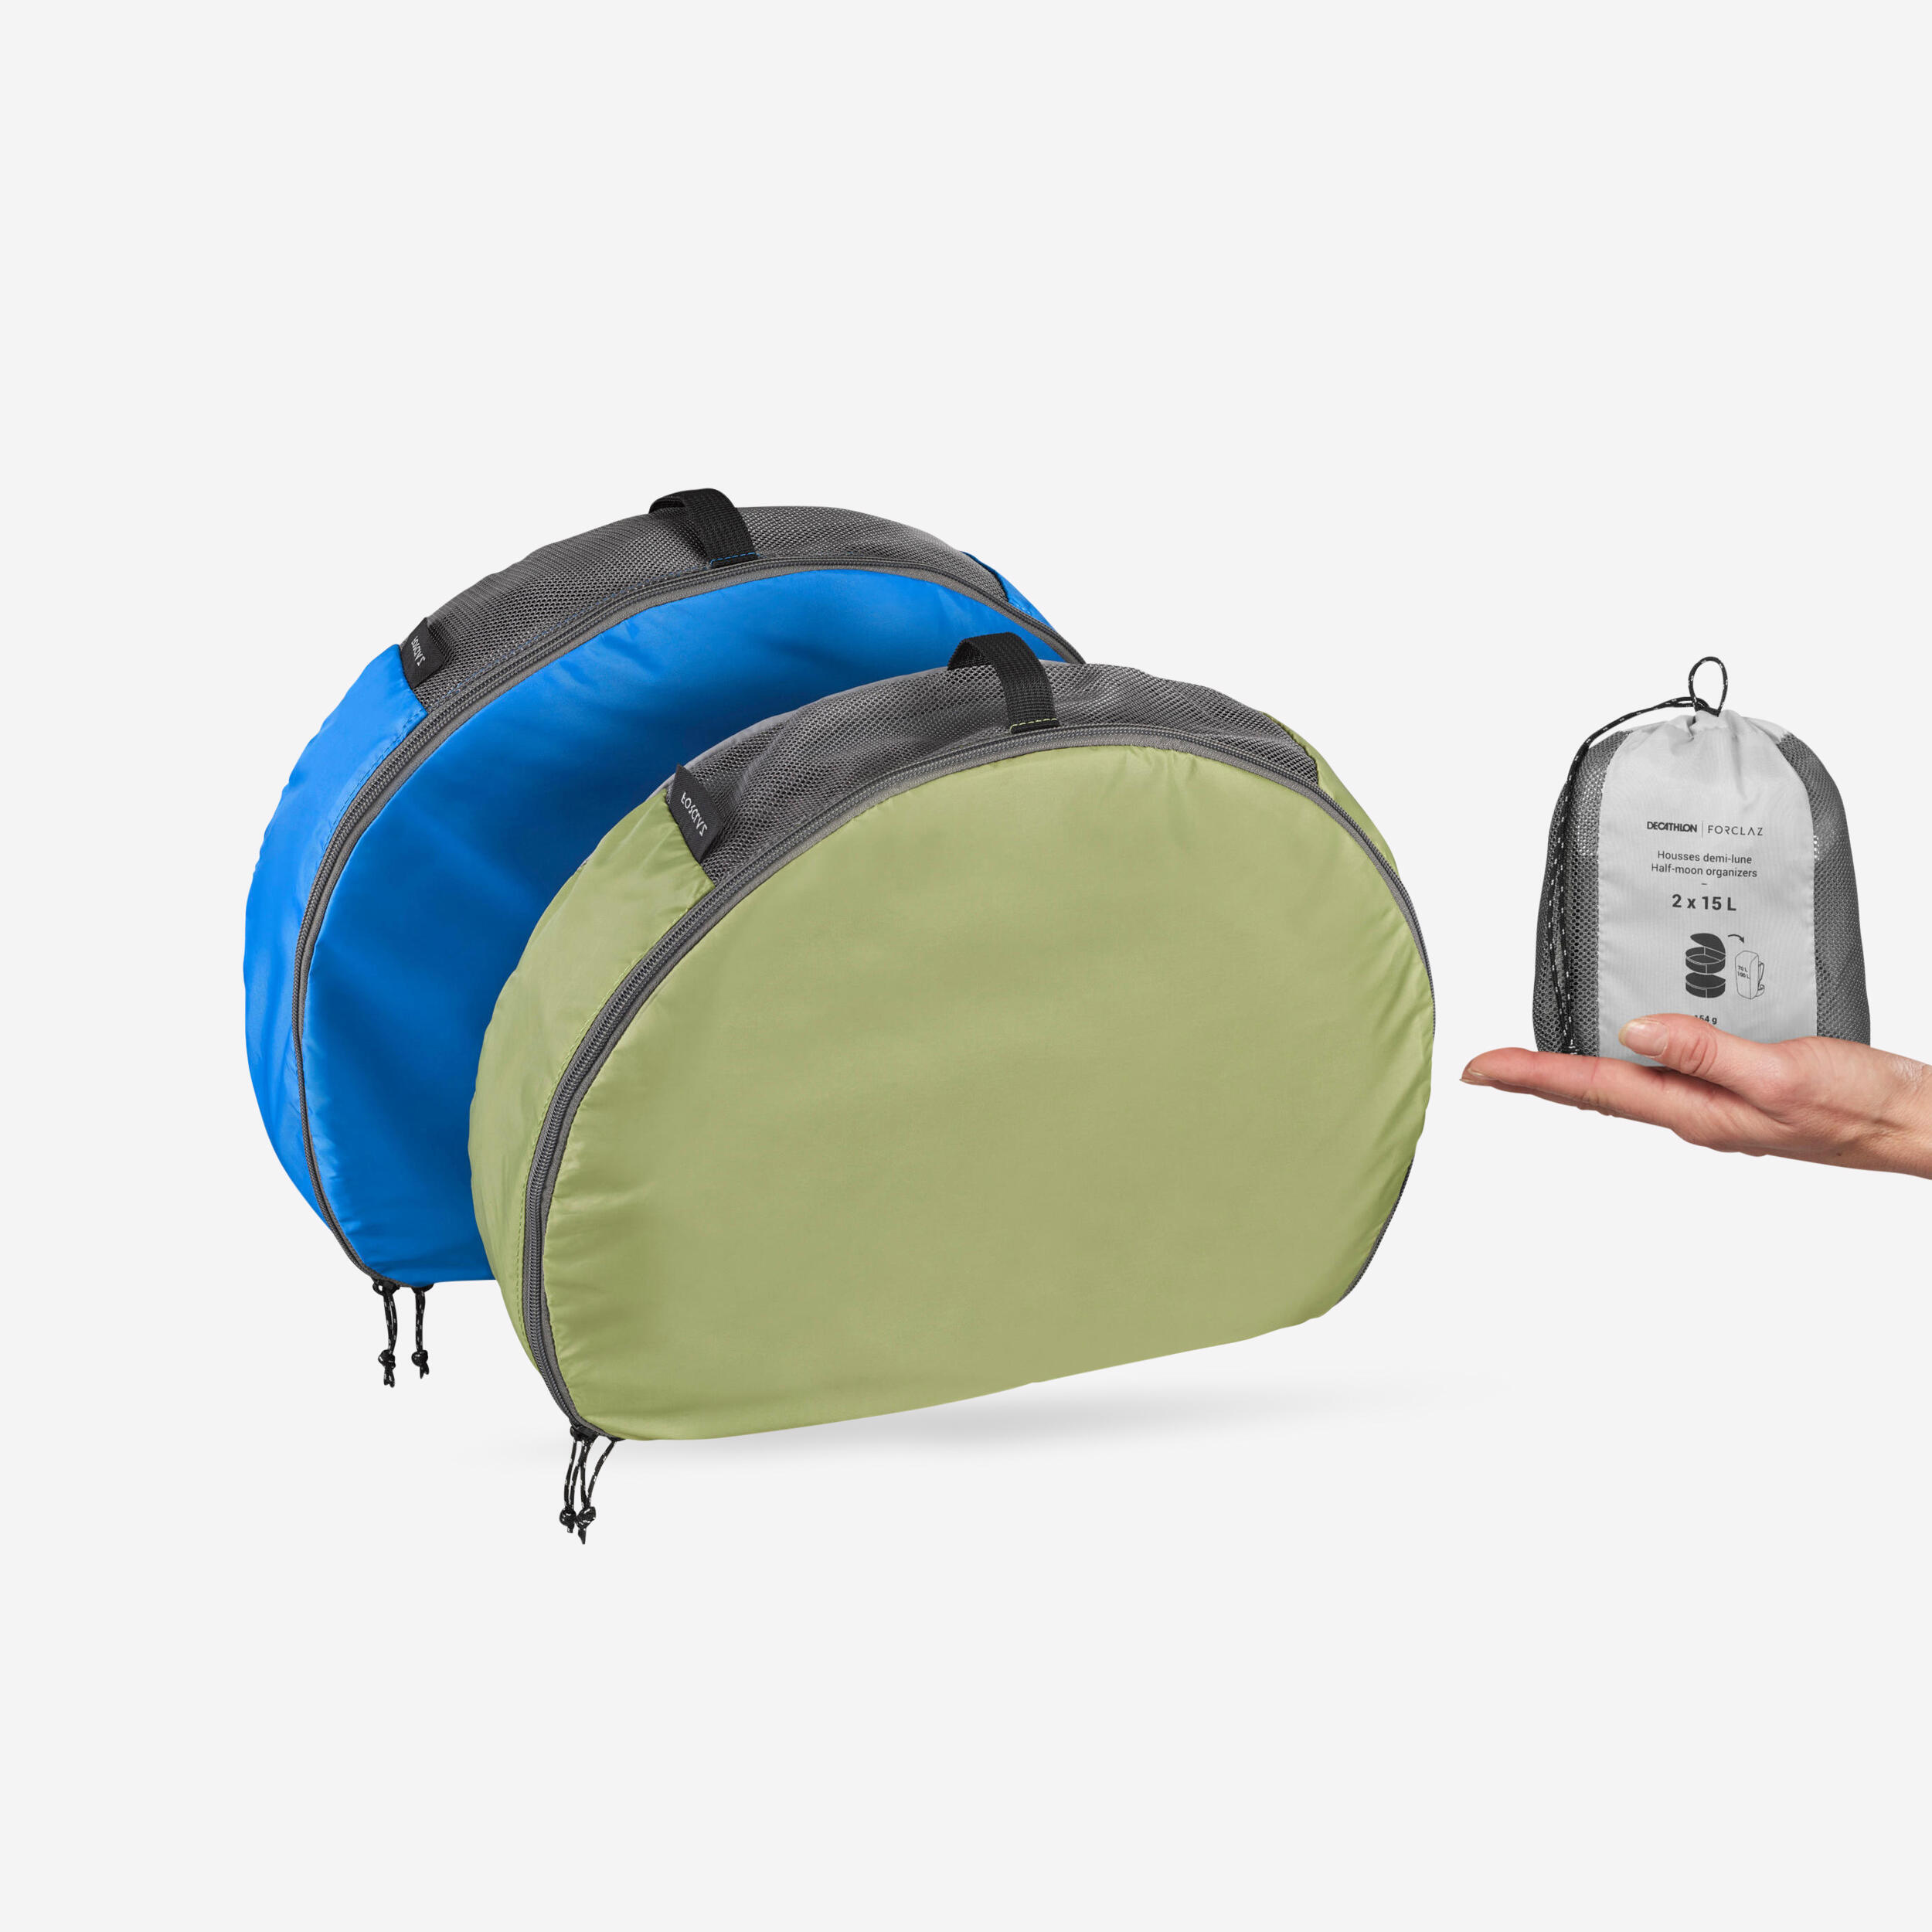 2 Half-Moon Bags For 70-90 L Backpacks 1/3